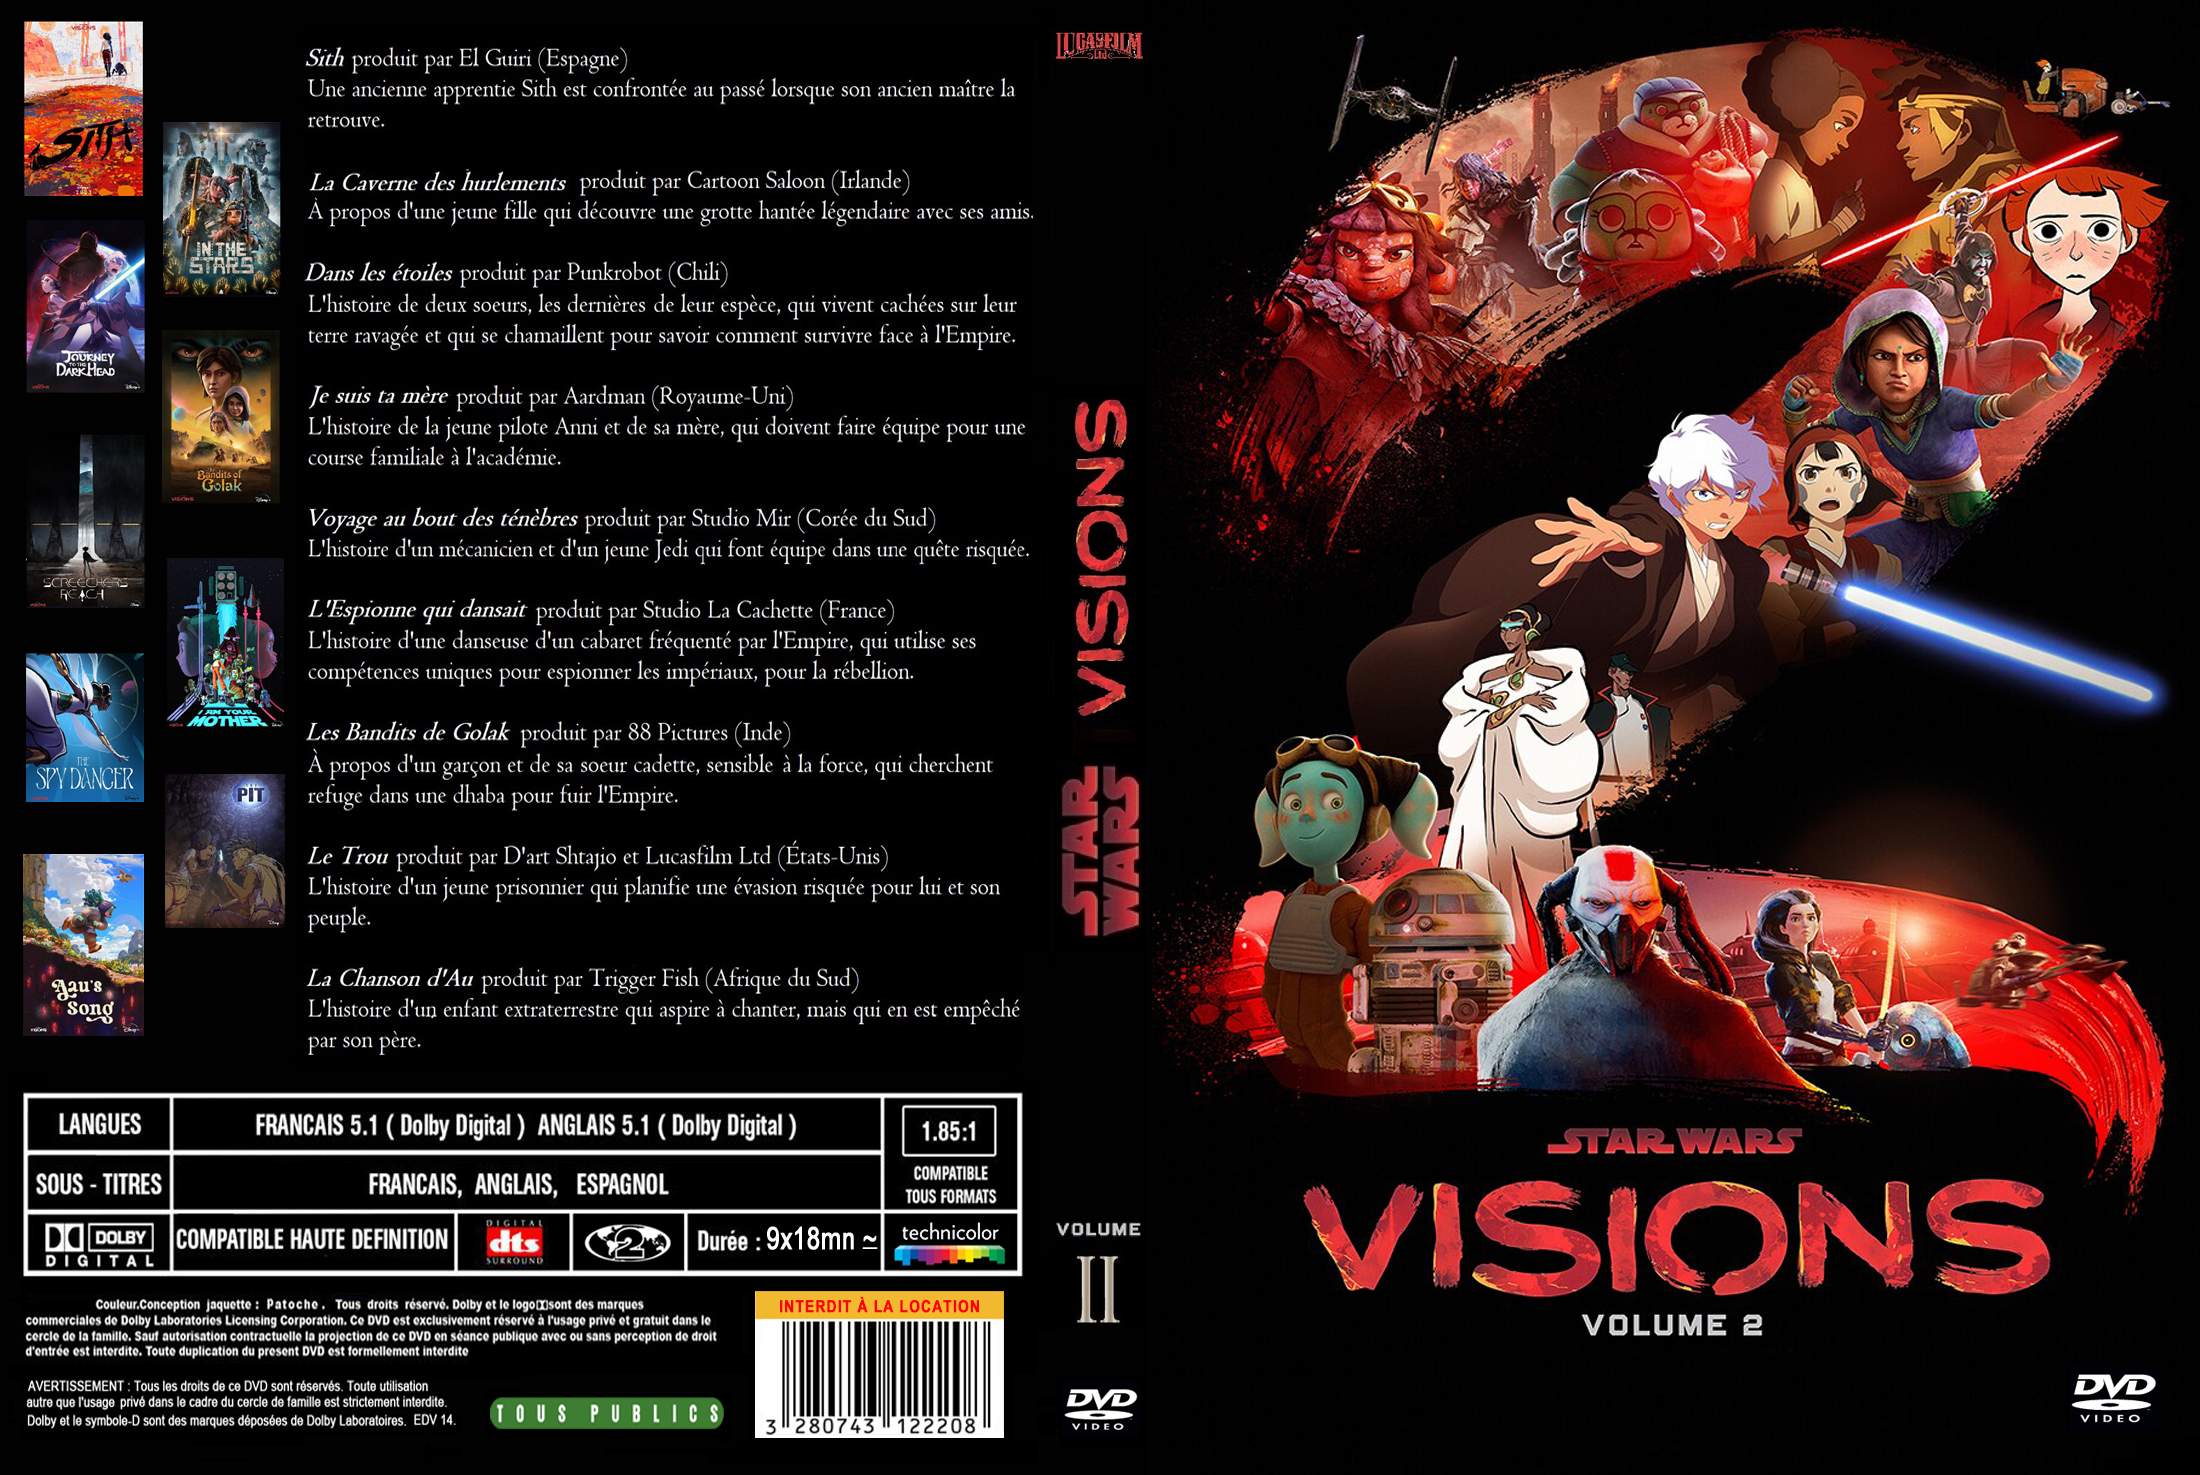 Jaquette DVD Star Wars Visions Saison 2 custom